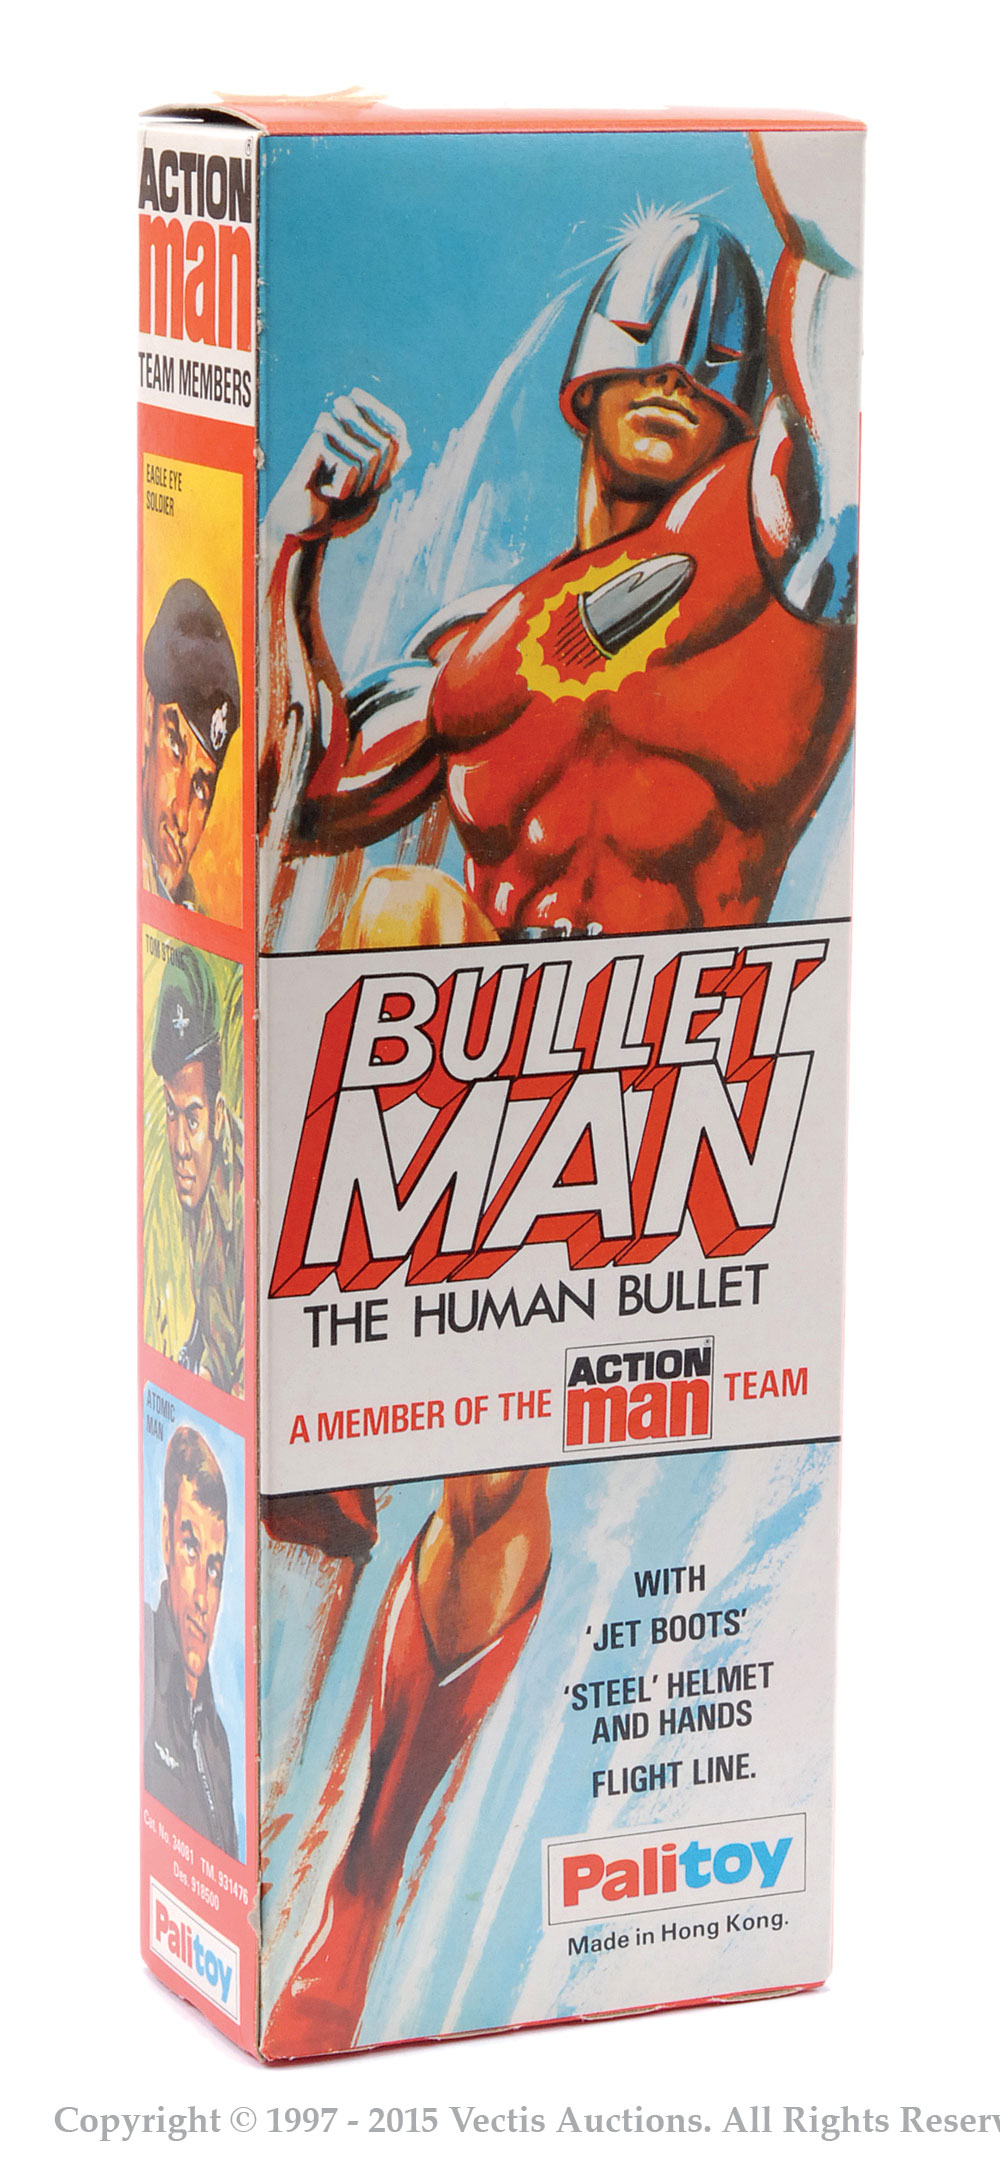 Palitoy Action Man boxed Bullet Man No. 34081. Image: Vectis